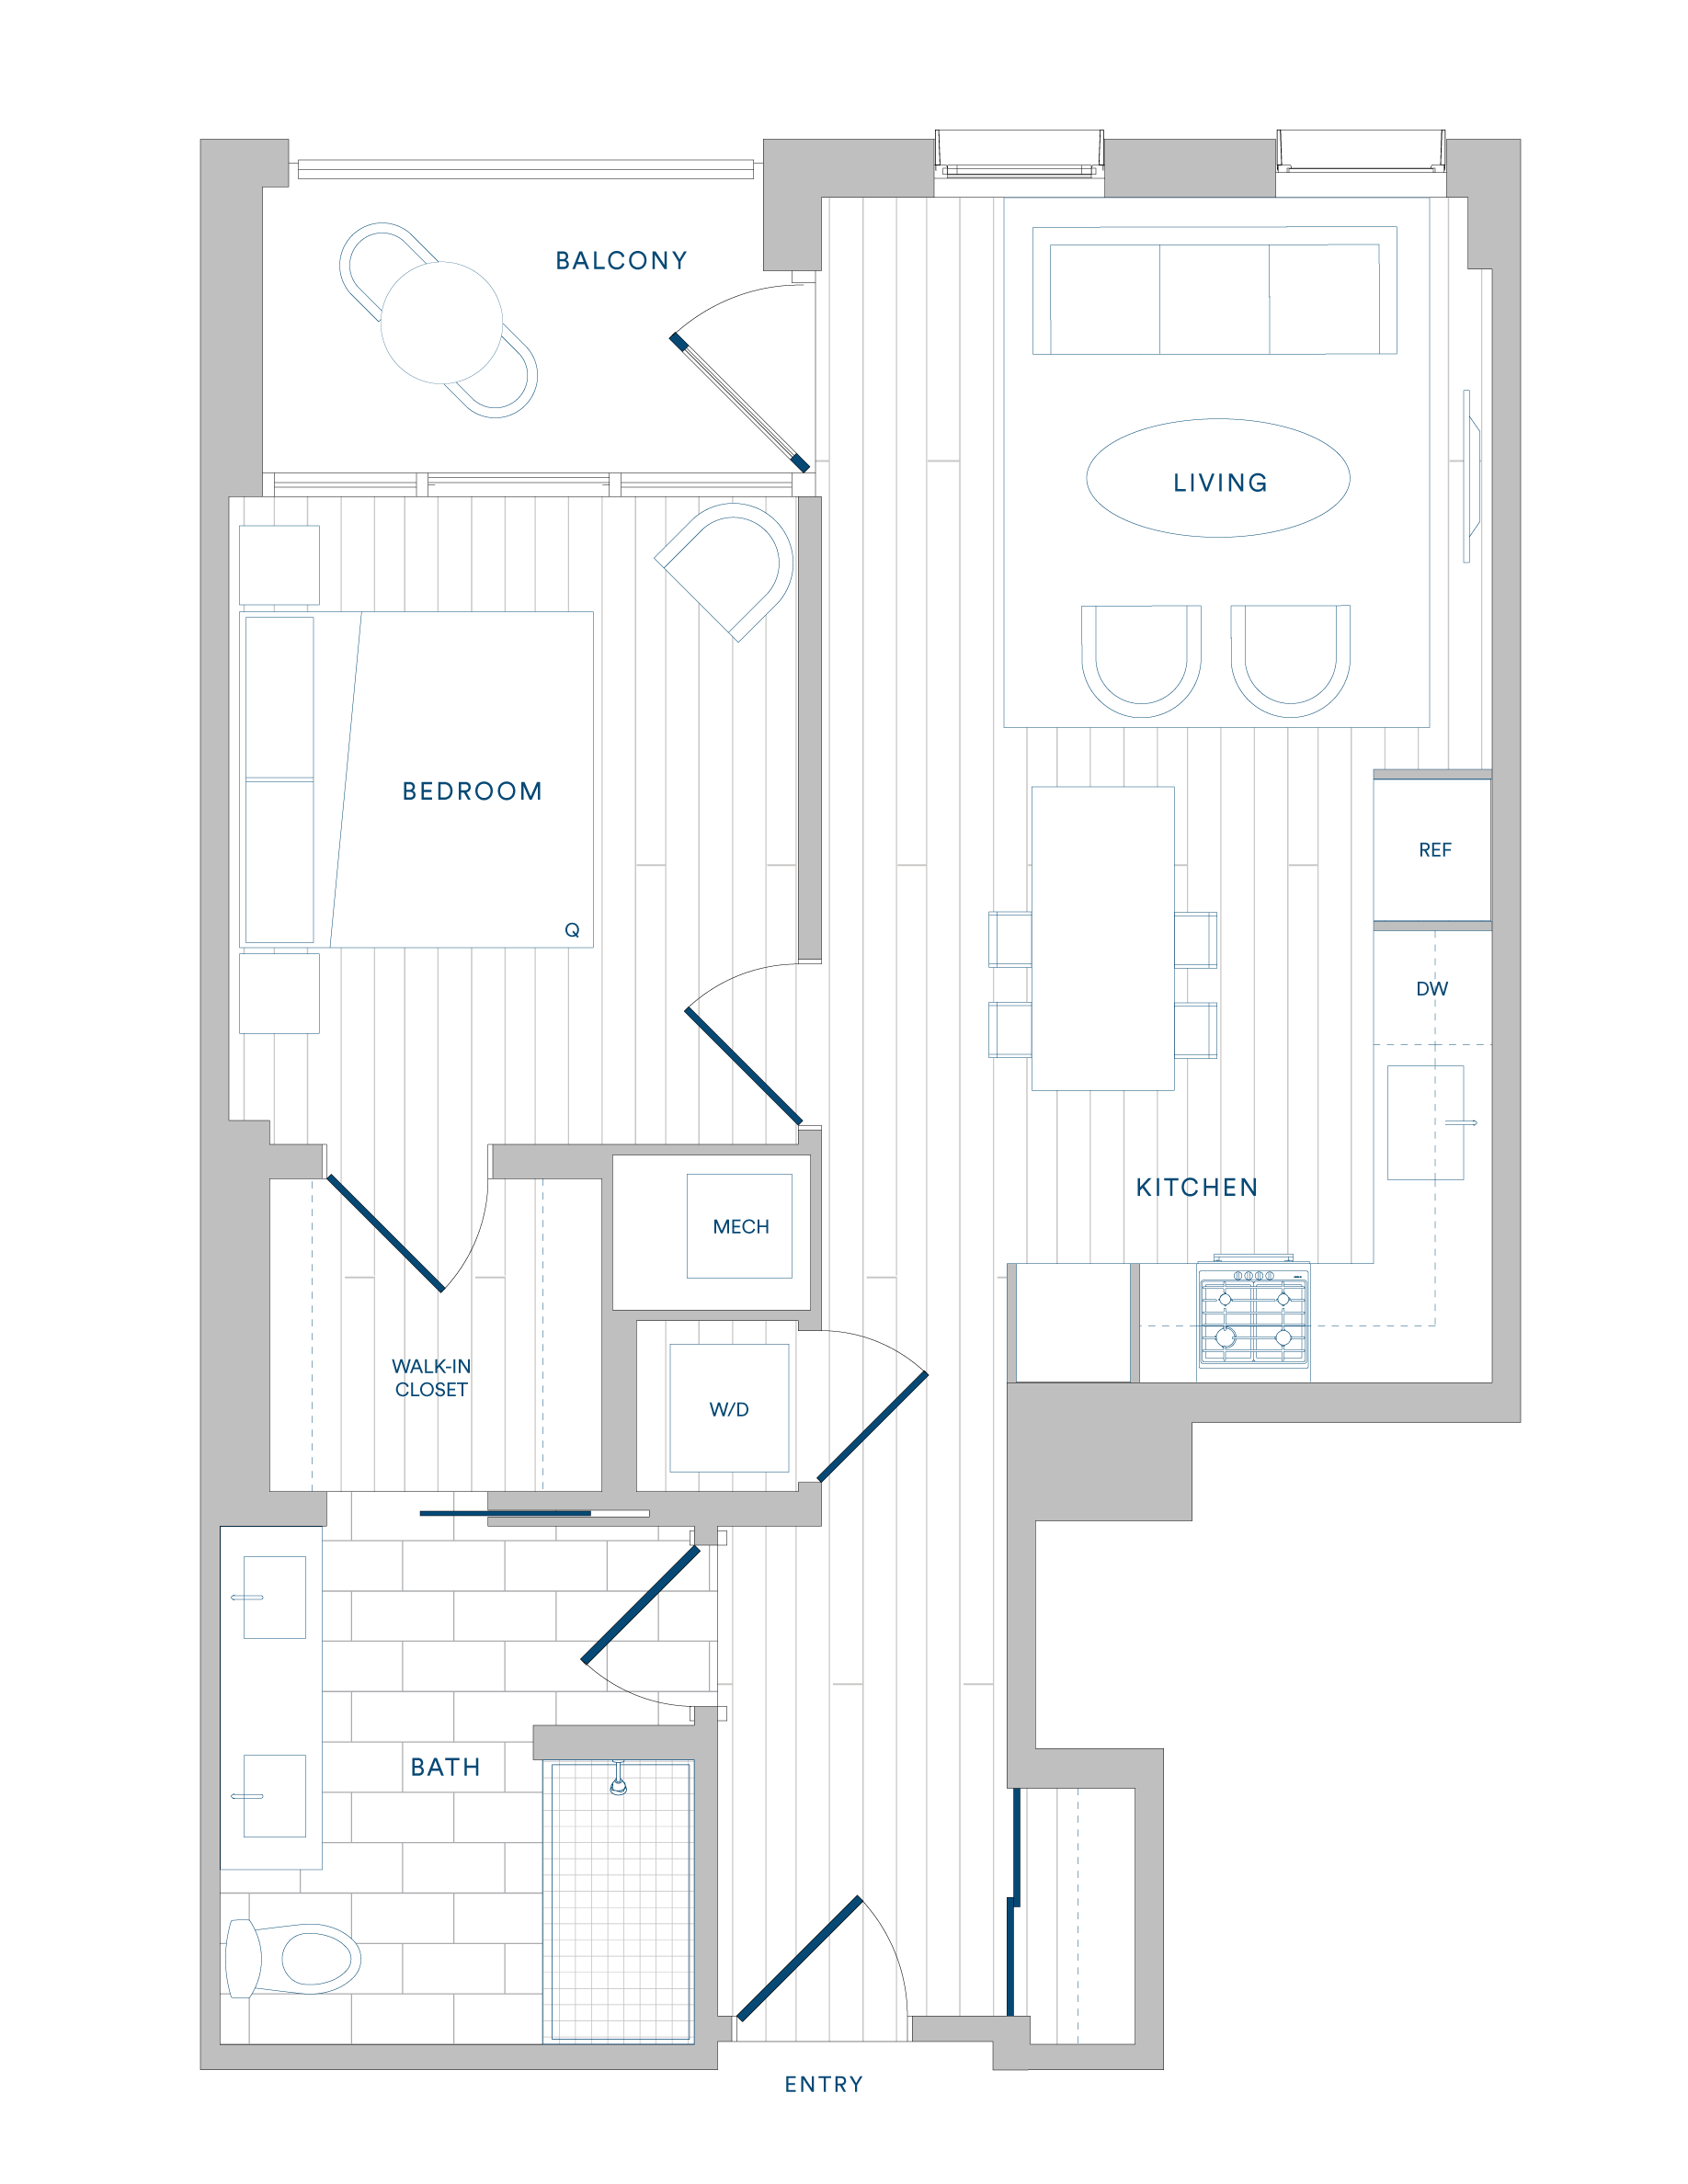 Floorplan for Apartment #1209, 1 bedroom unit at Margarite